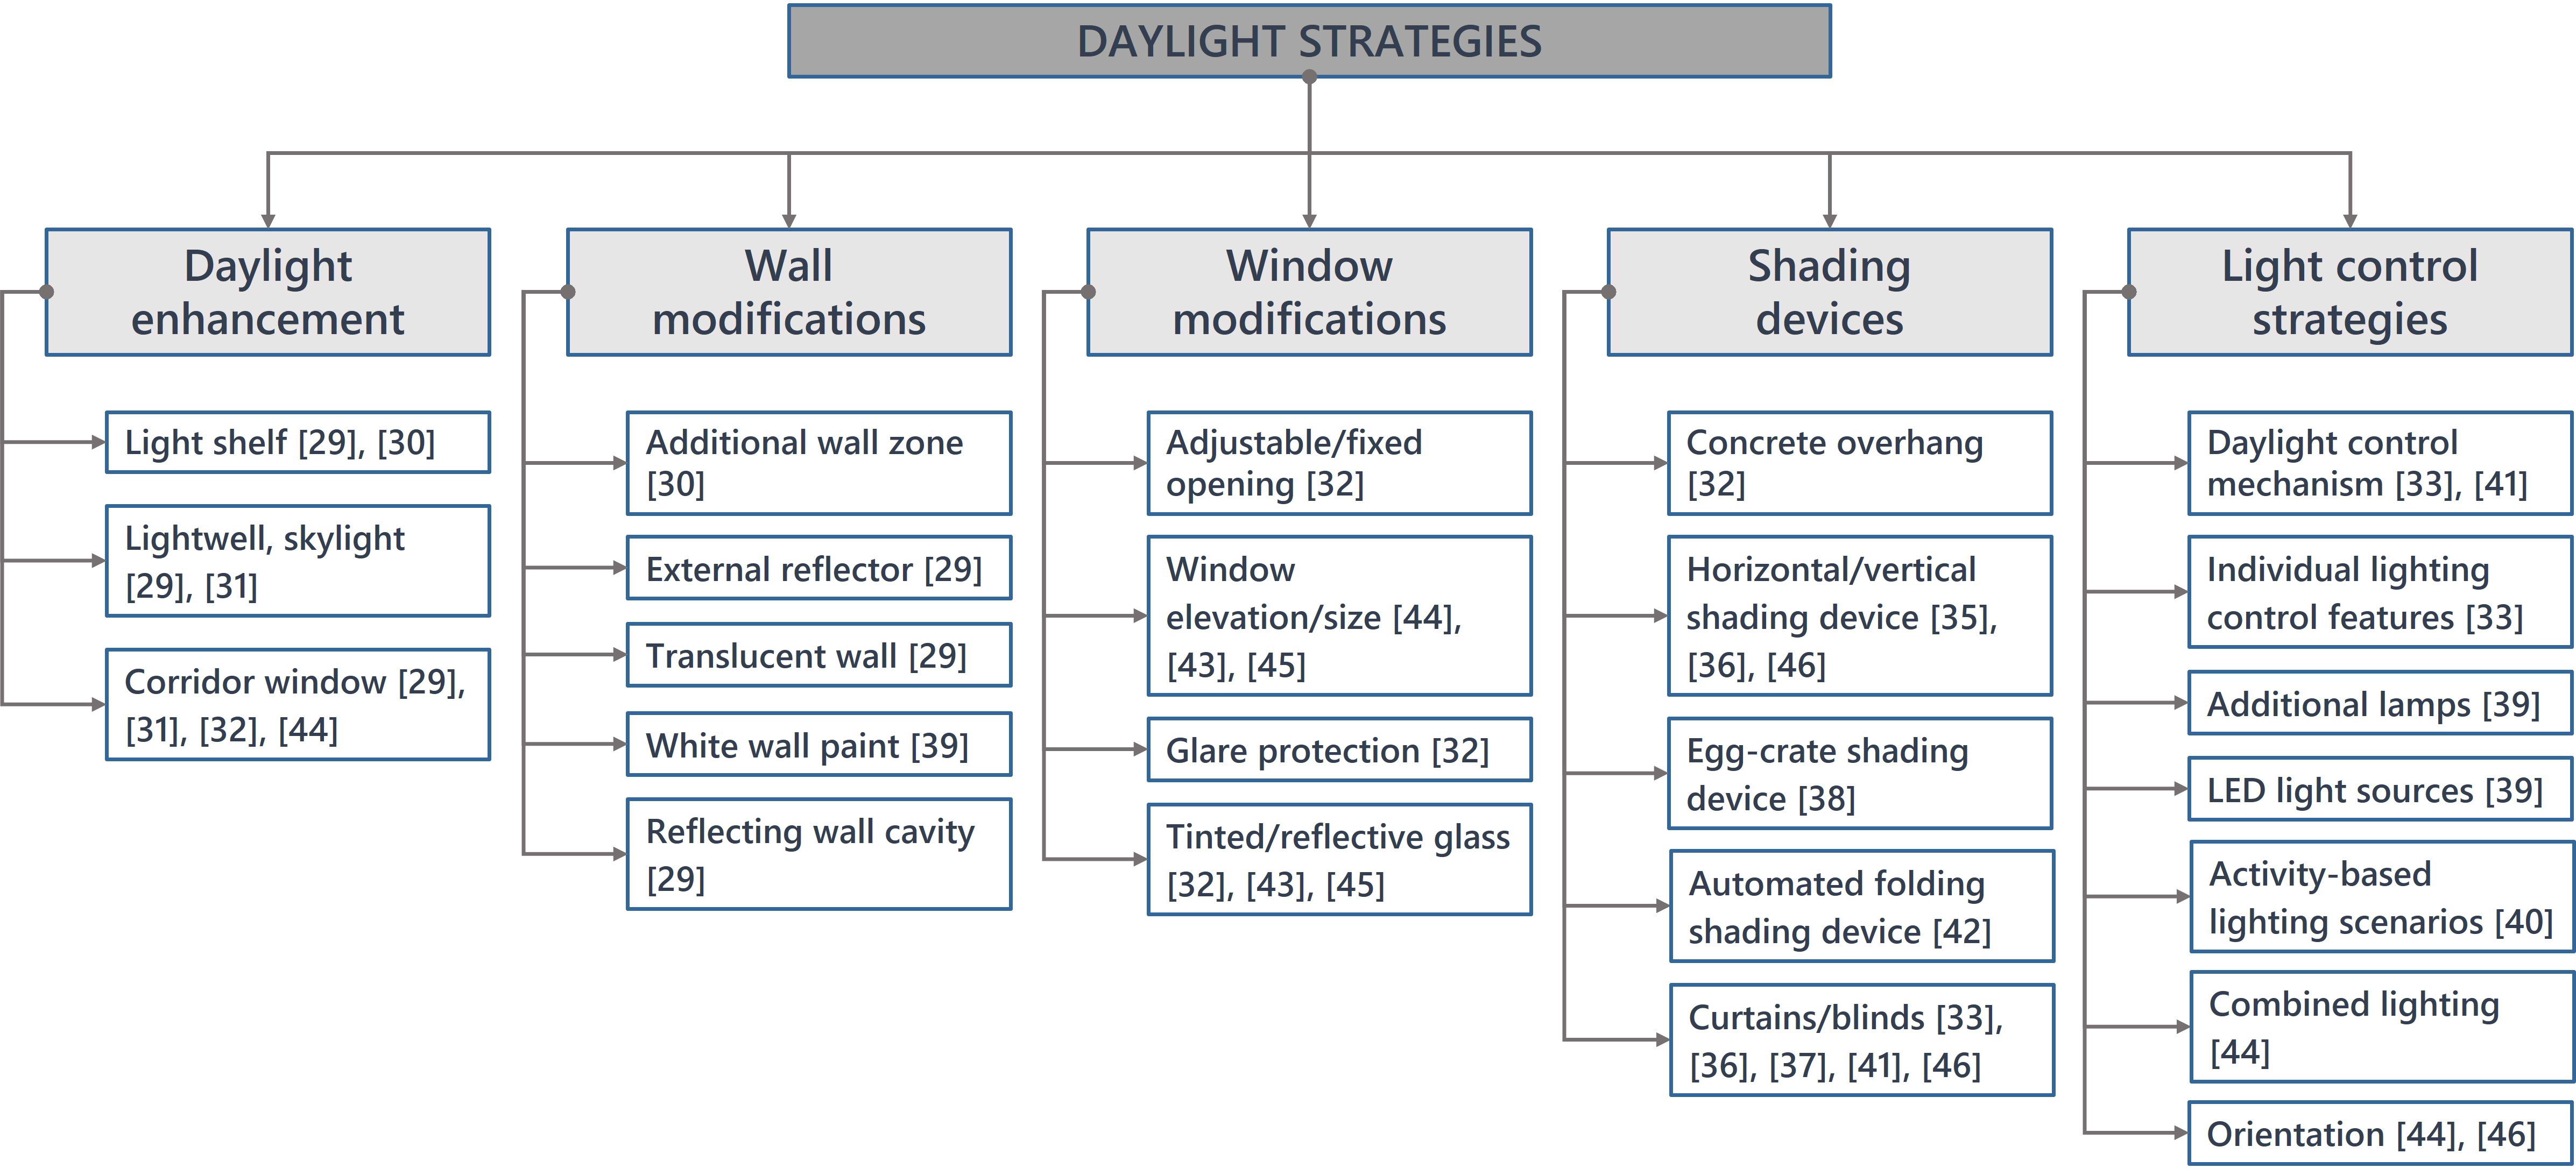 Summary of the daylight control strategies.